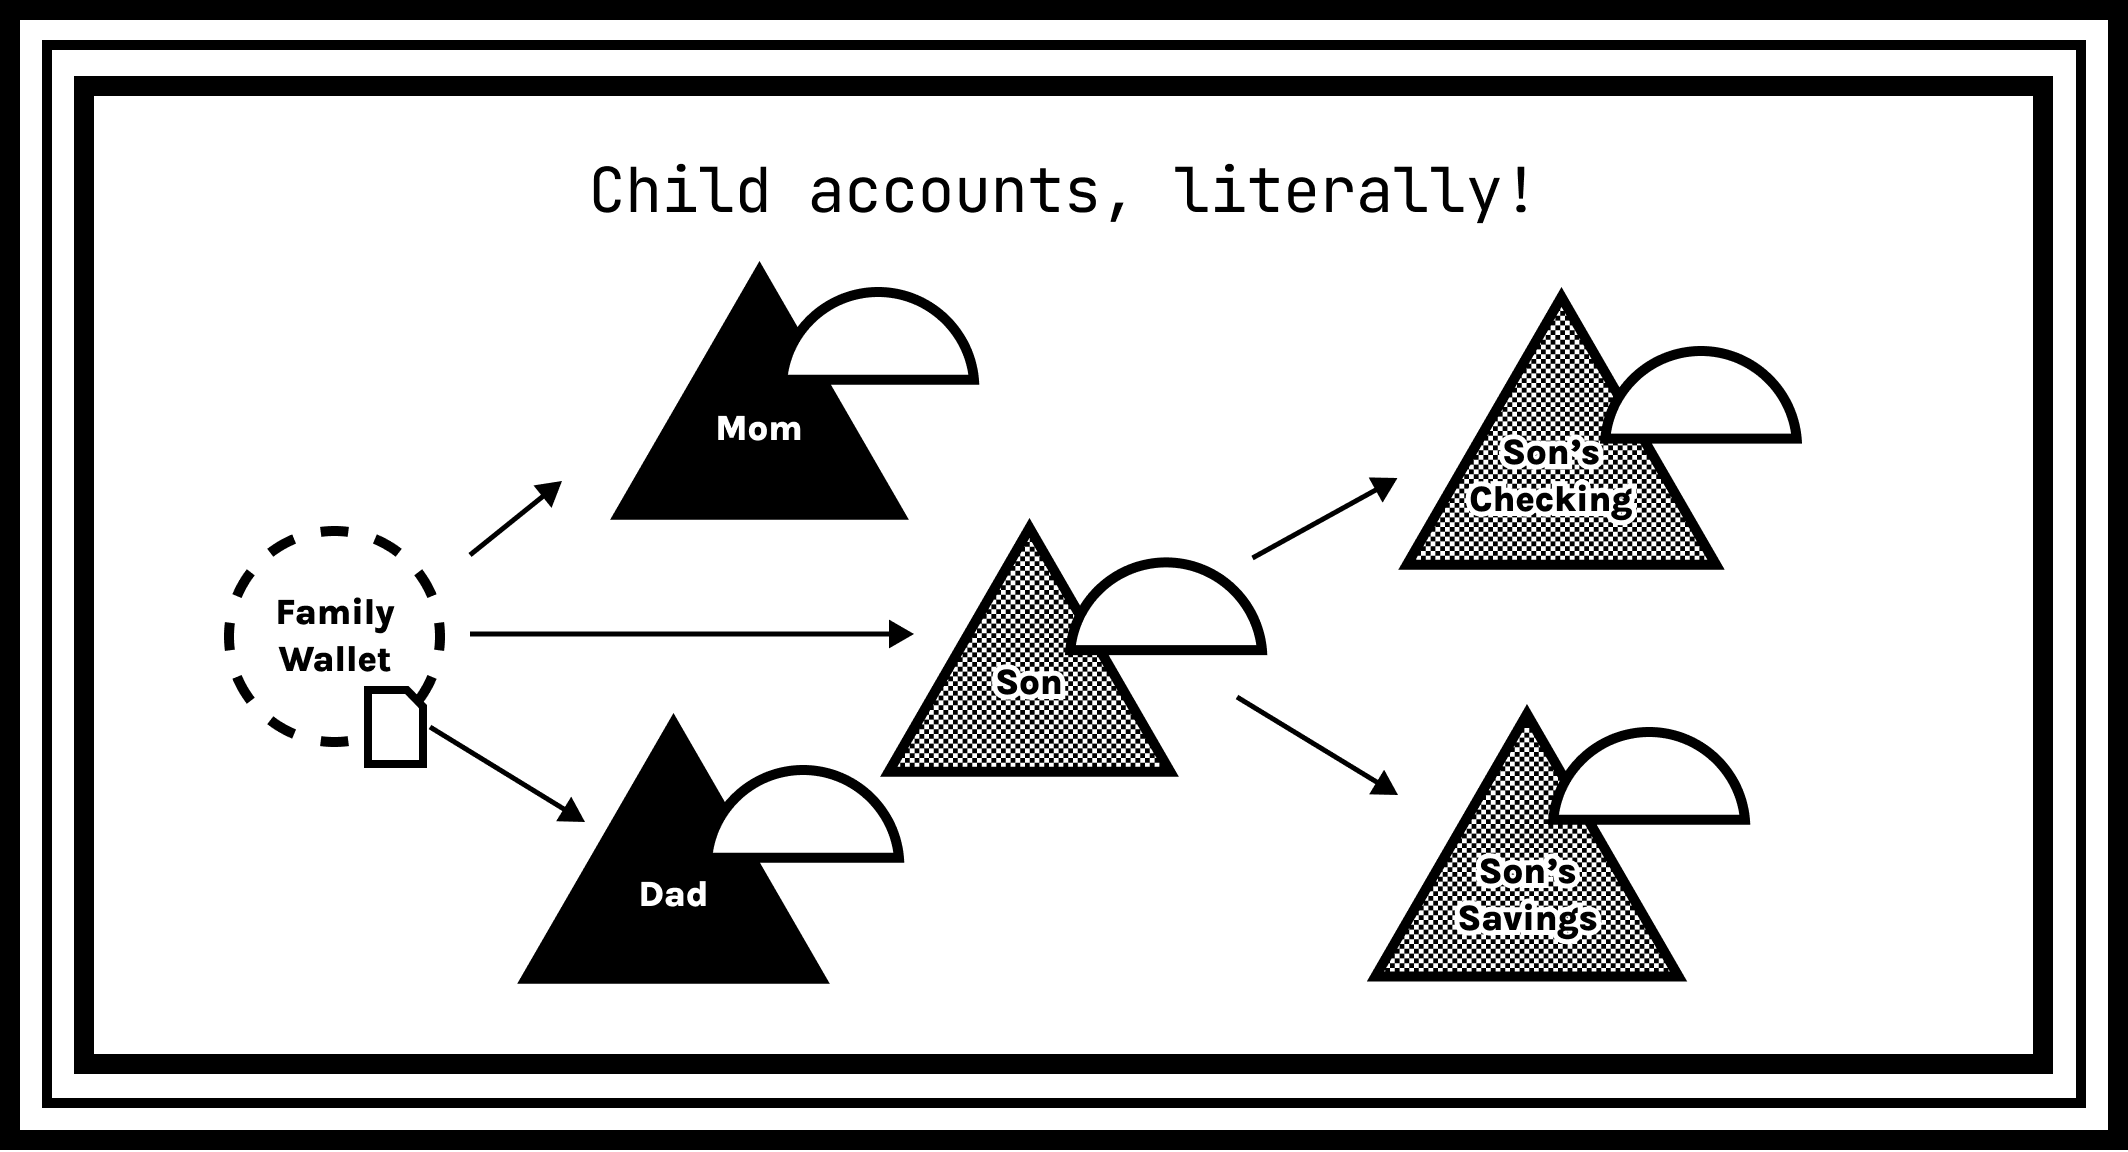 Child accounts, literally!